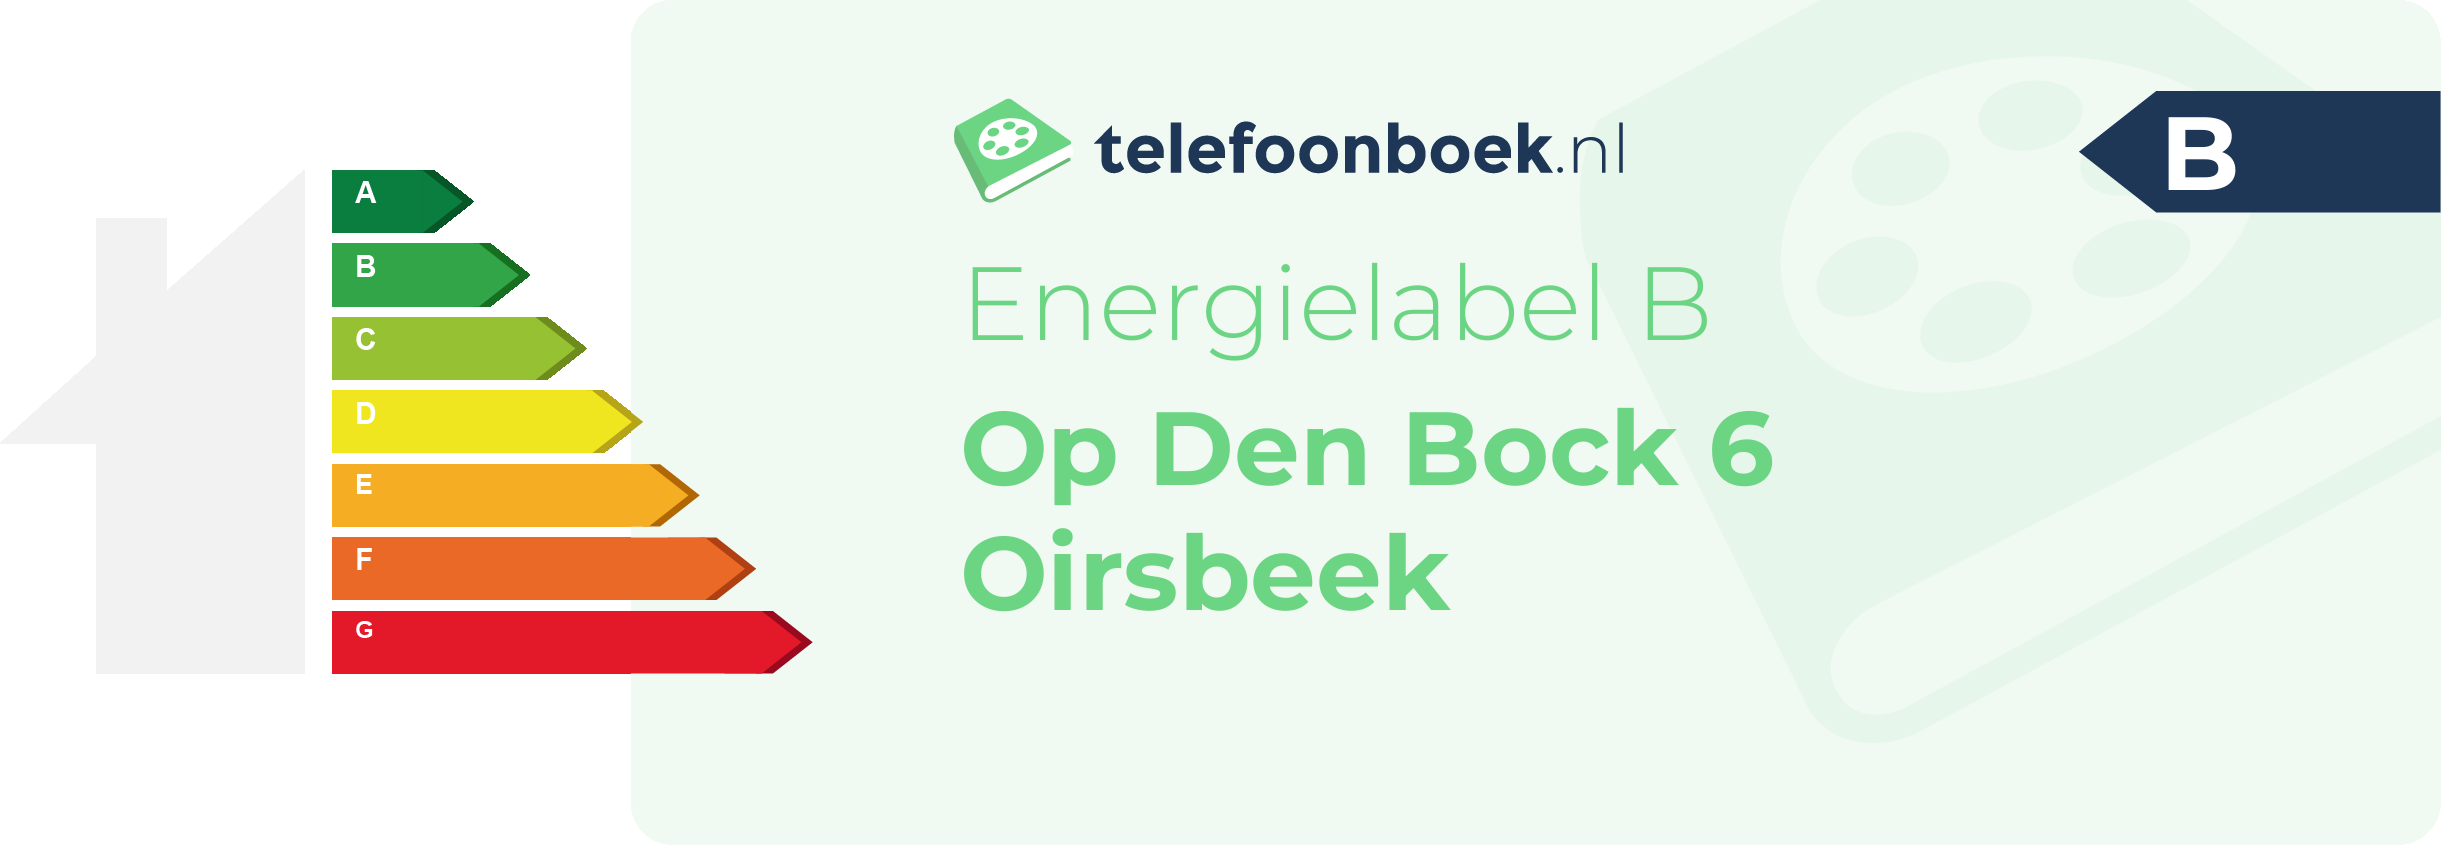 Energielabel Op Den Bock 6 Oirsbeek